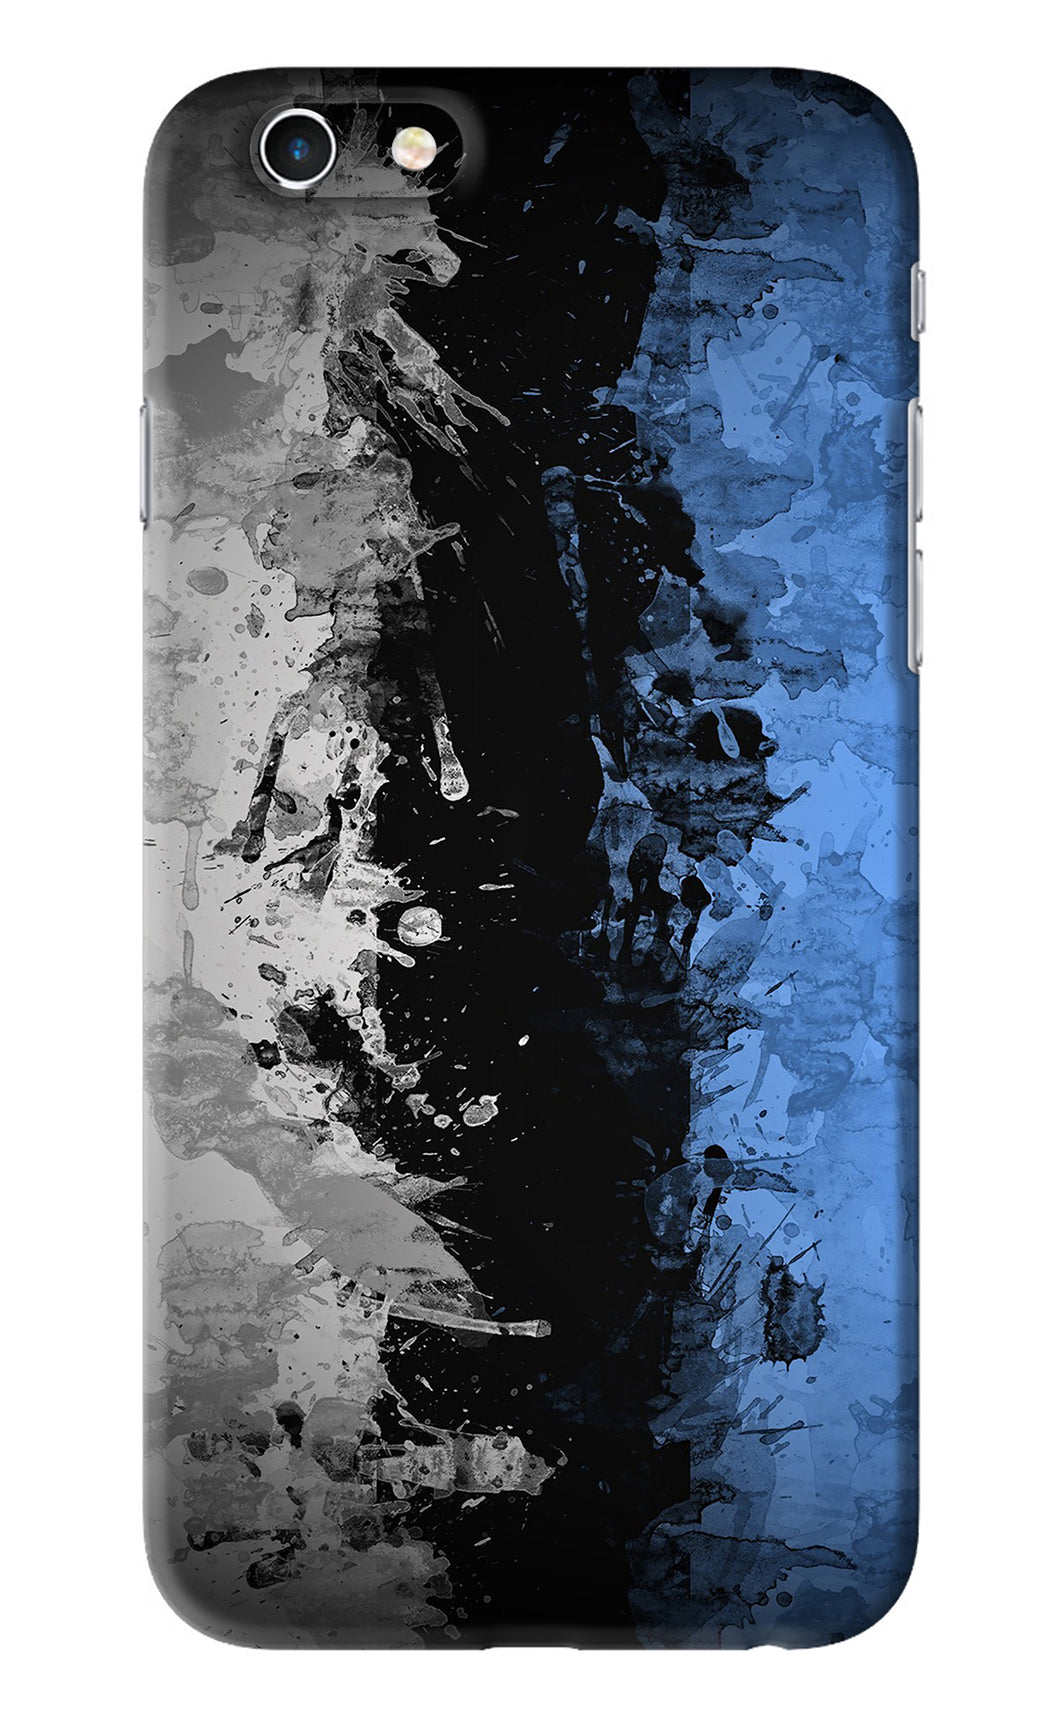 Artistic Design iPhone 6 Back Skin Wrap